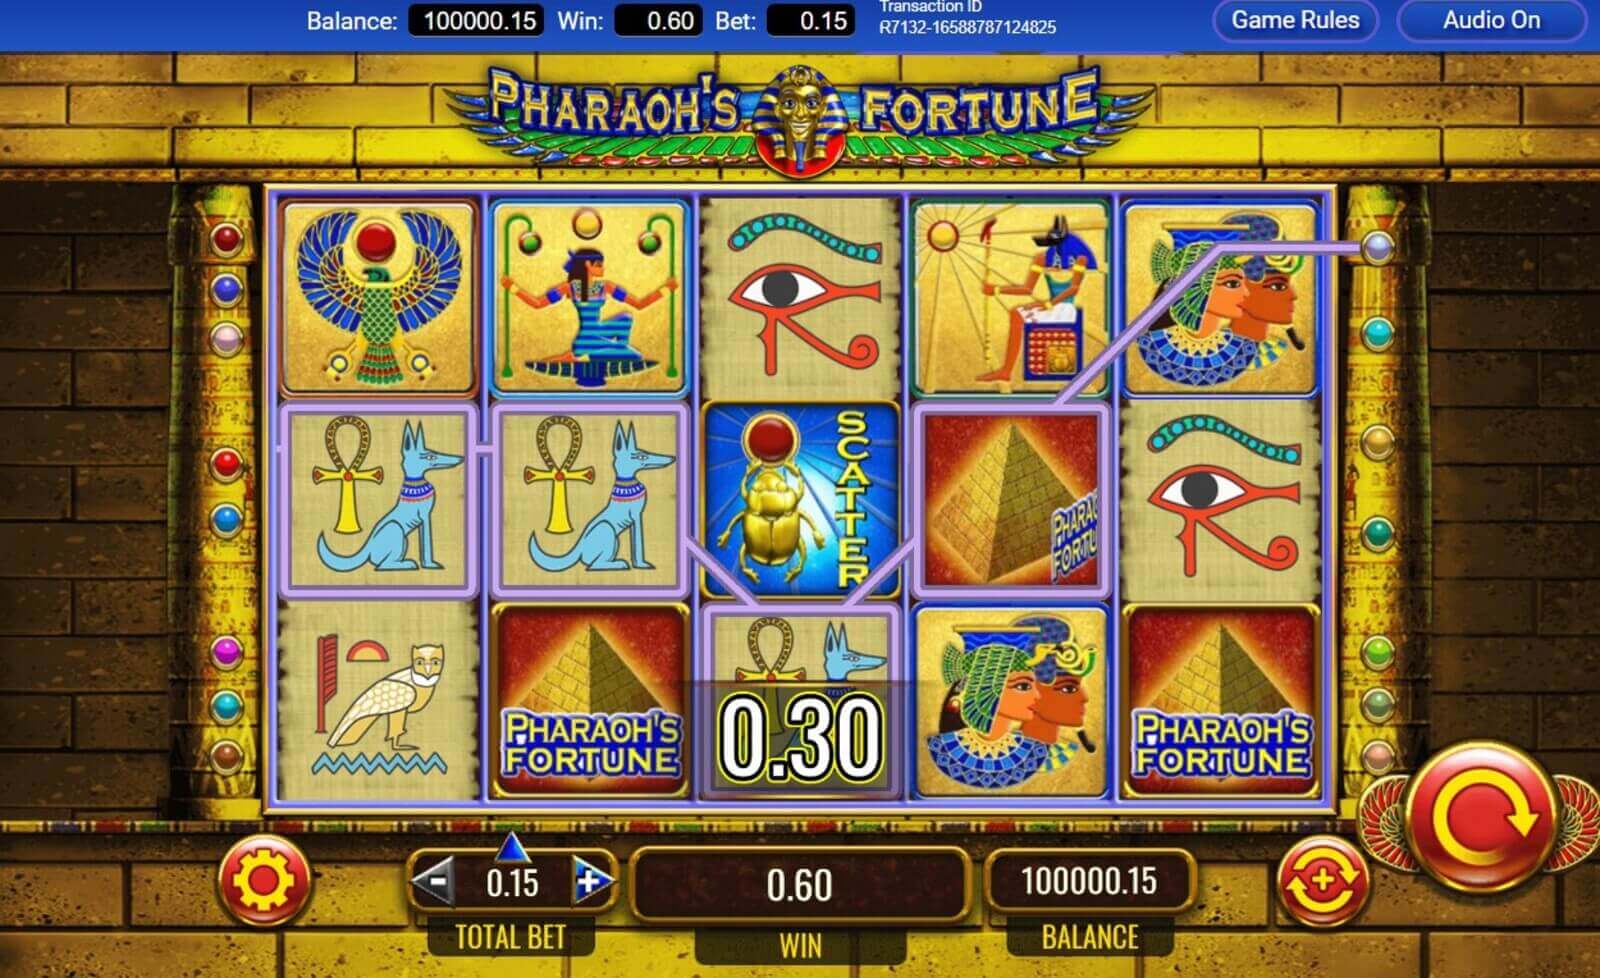 Juego de tragaperras gratis Pharaohs Fortune de IGT en casino online